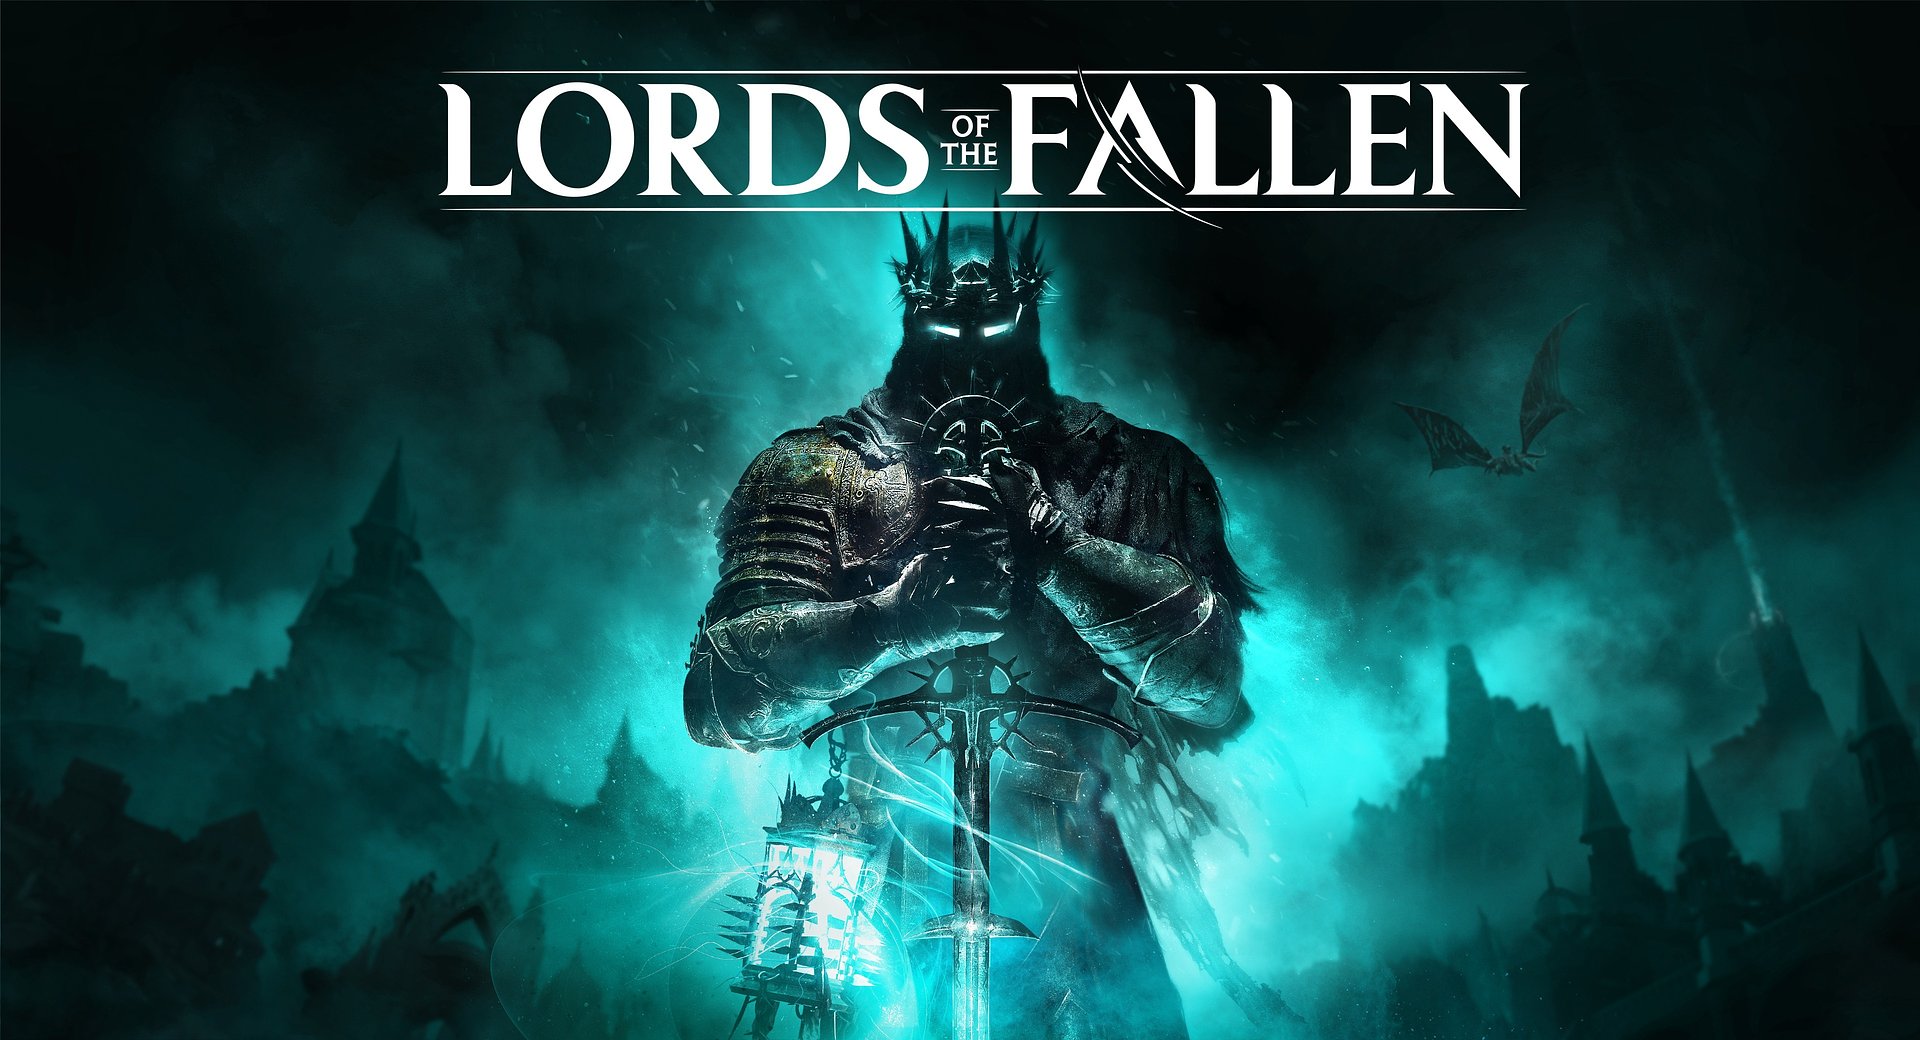 Recenzje Lords of the Fallen 